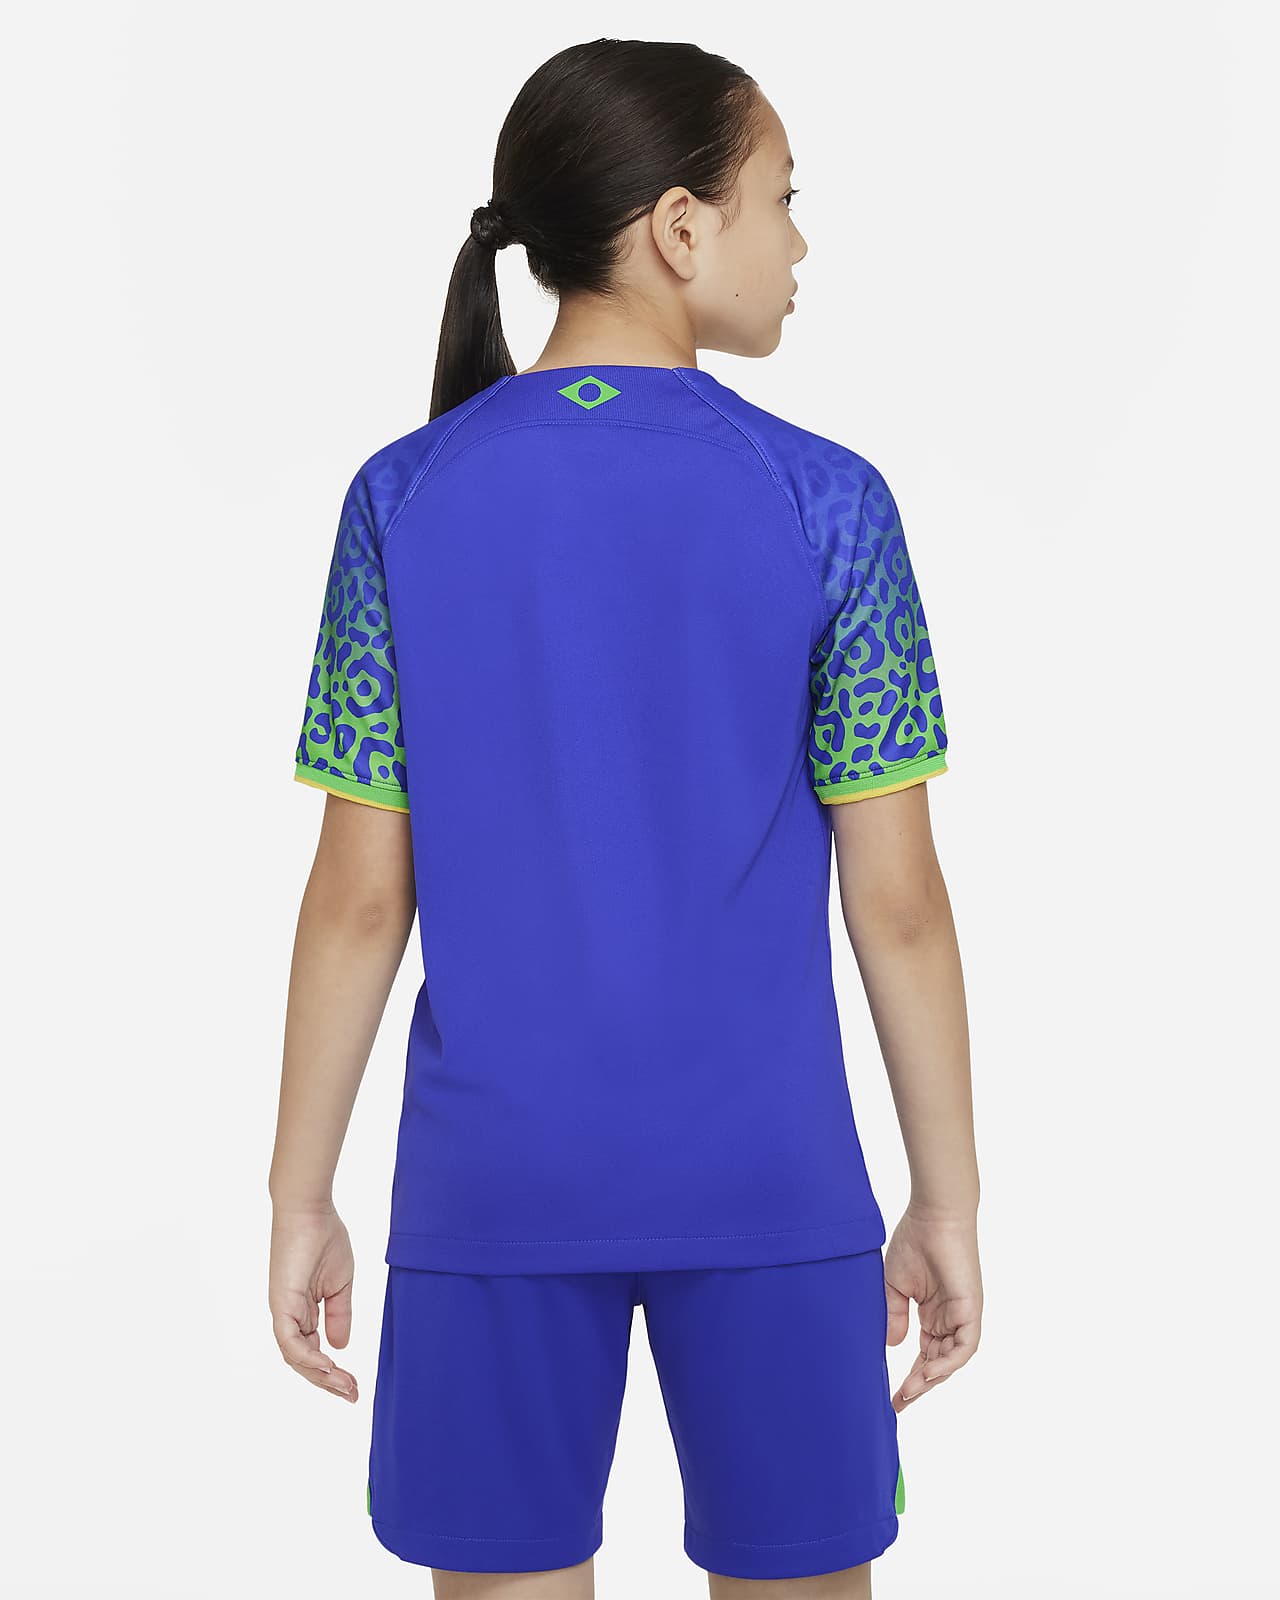 Nike Football Brazil squad t-shirt in blue 893353-454